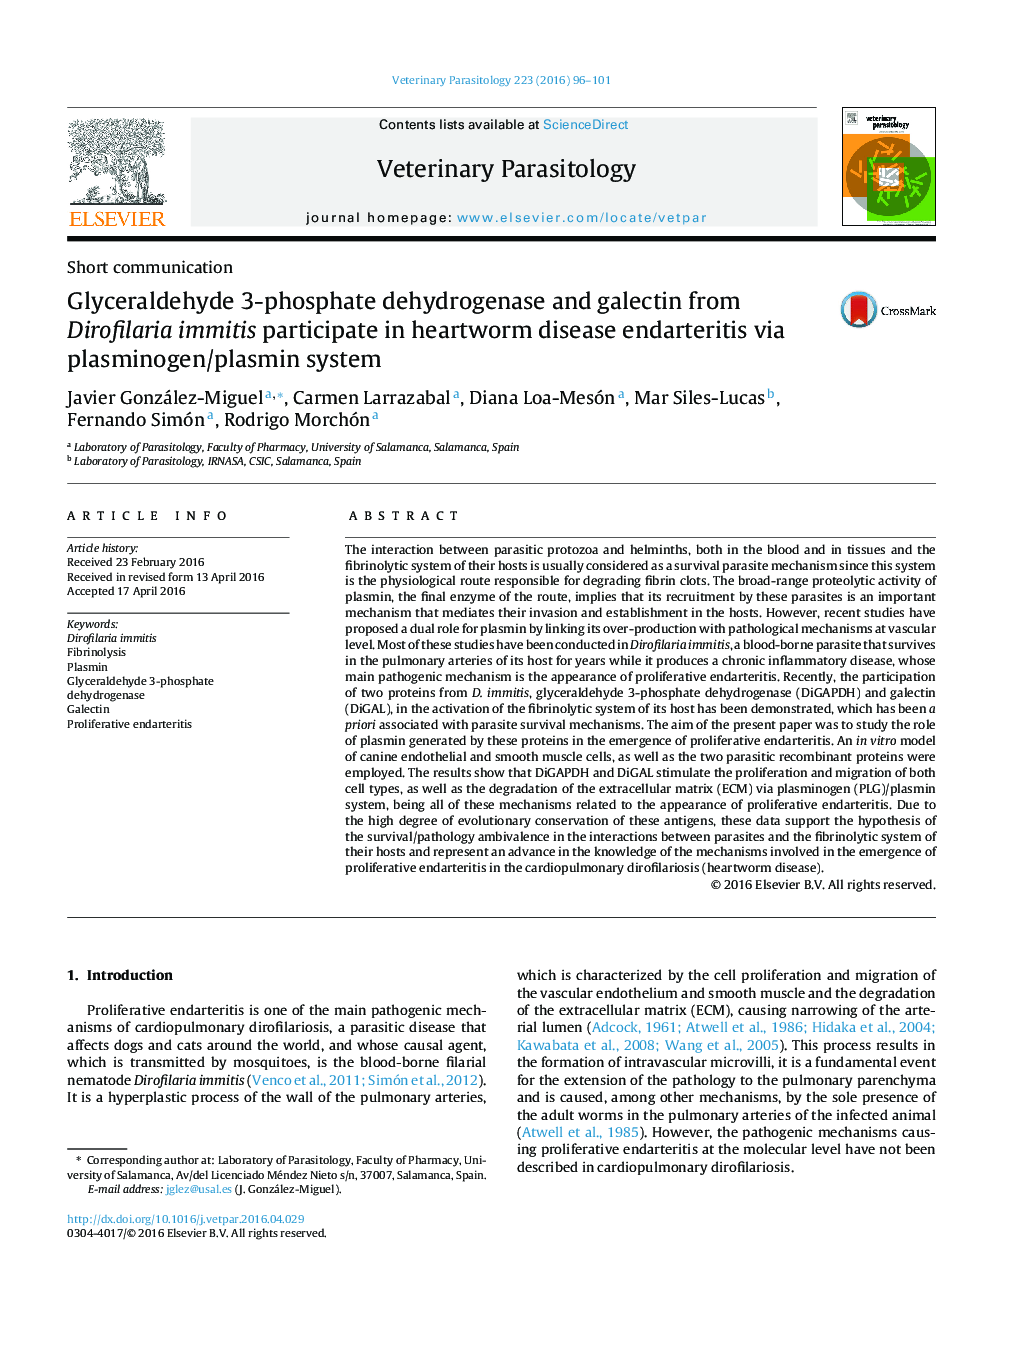 Glyceraldehyde 3-phosphate dehydrogenase and galectin from Dirofilaria immitis participate in heartworm disease endarteritis via plasminogen/plasmin system